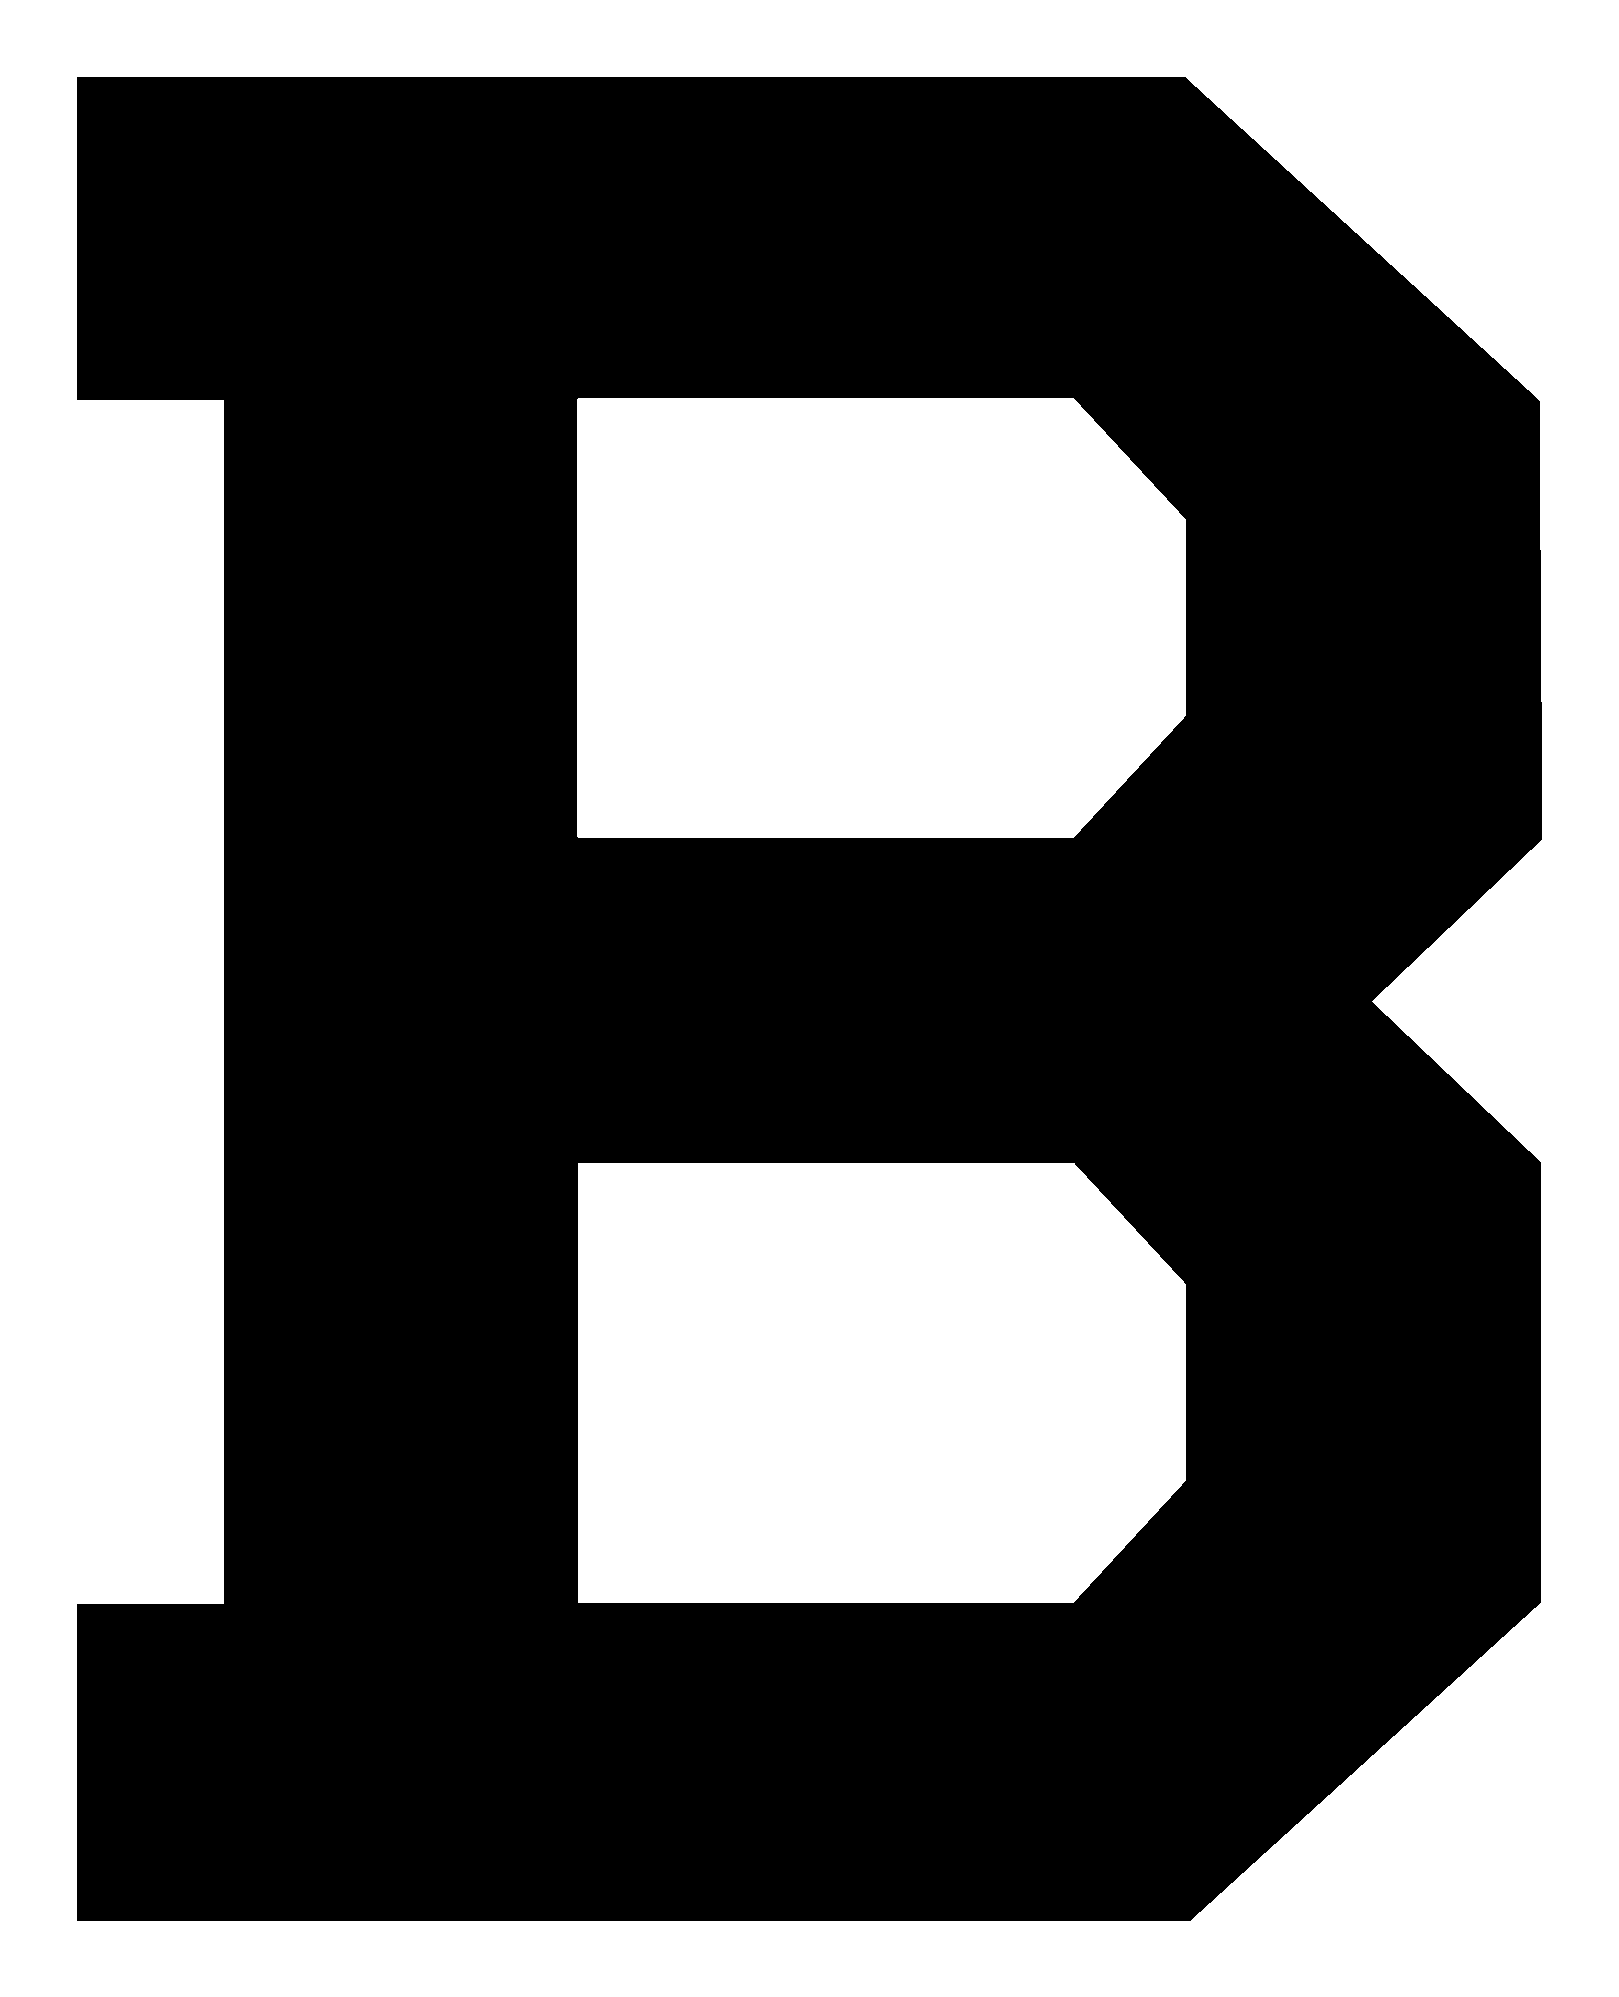 Boston Bruins Logo Black And White - Boston Bruins (2400x2400)